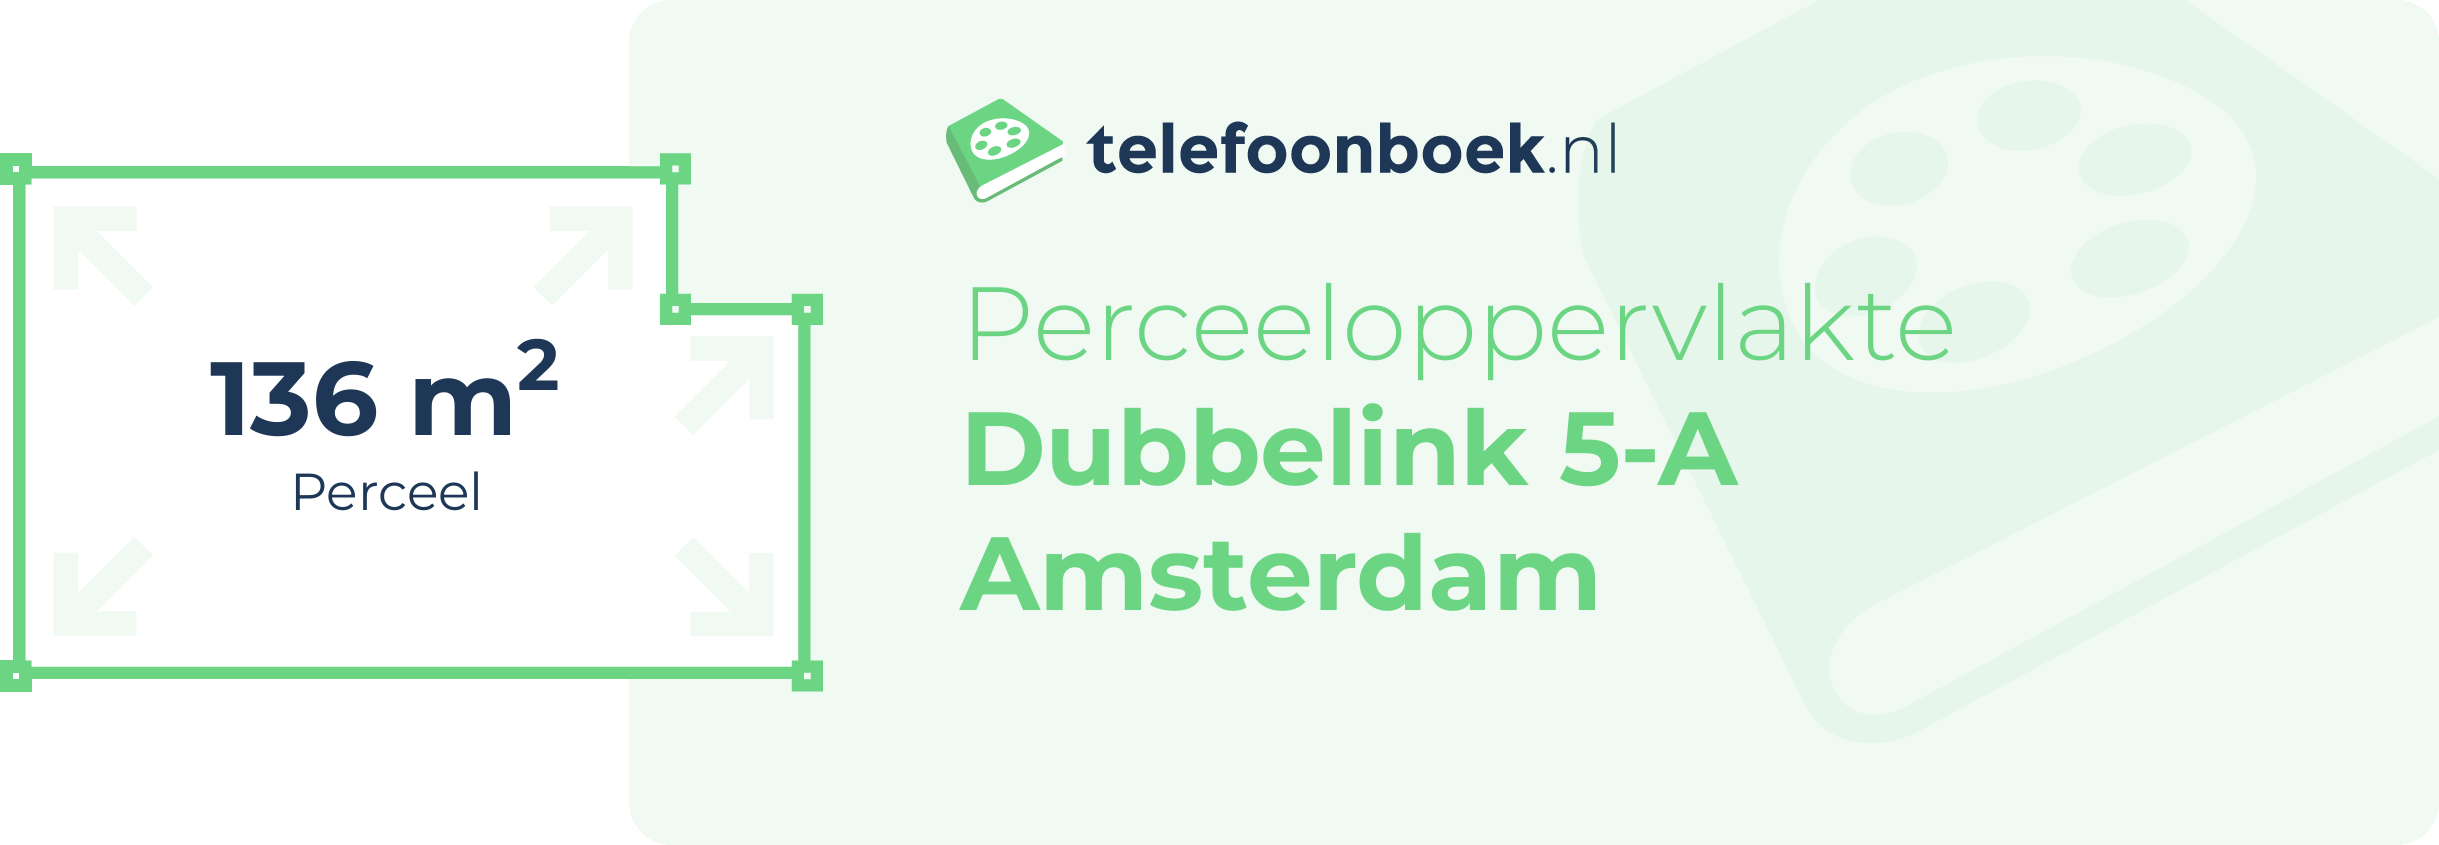 Perceeloppervlakte Dubbelink 5-A Amsterdam